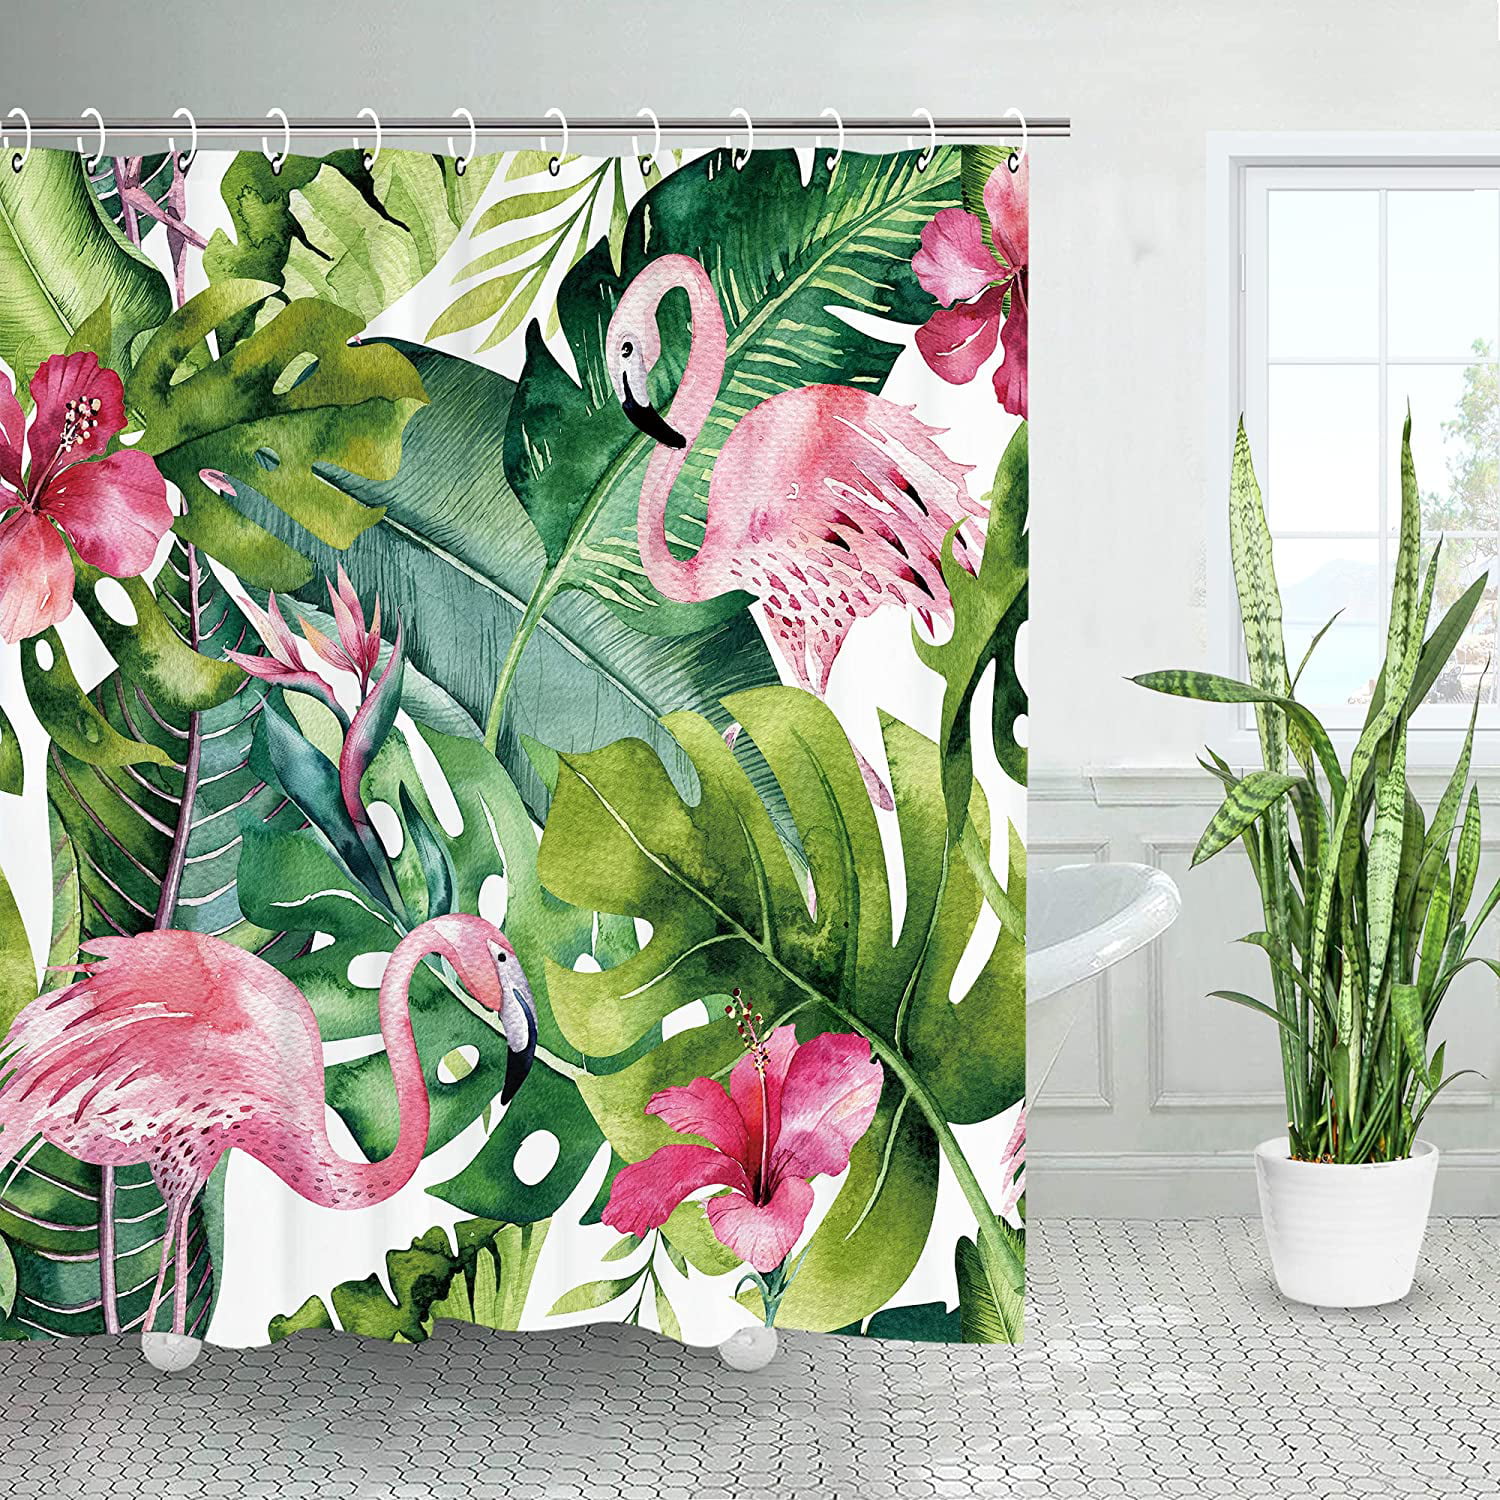 Waterproof Flamingo Shower Curtain Fabric Tropical Leaves and Flowers Print Bath 